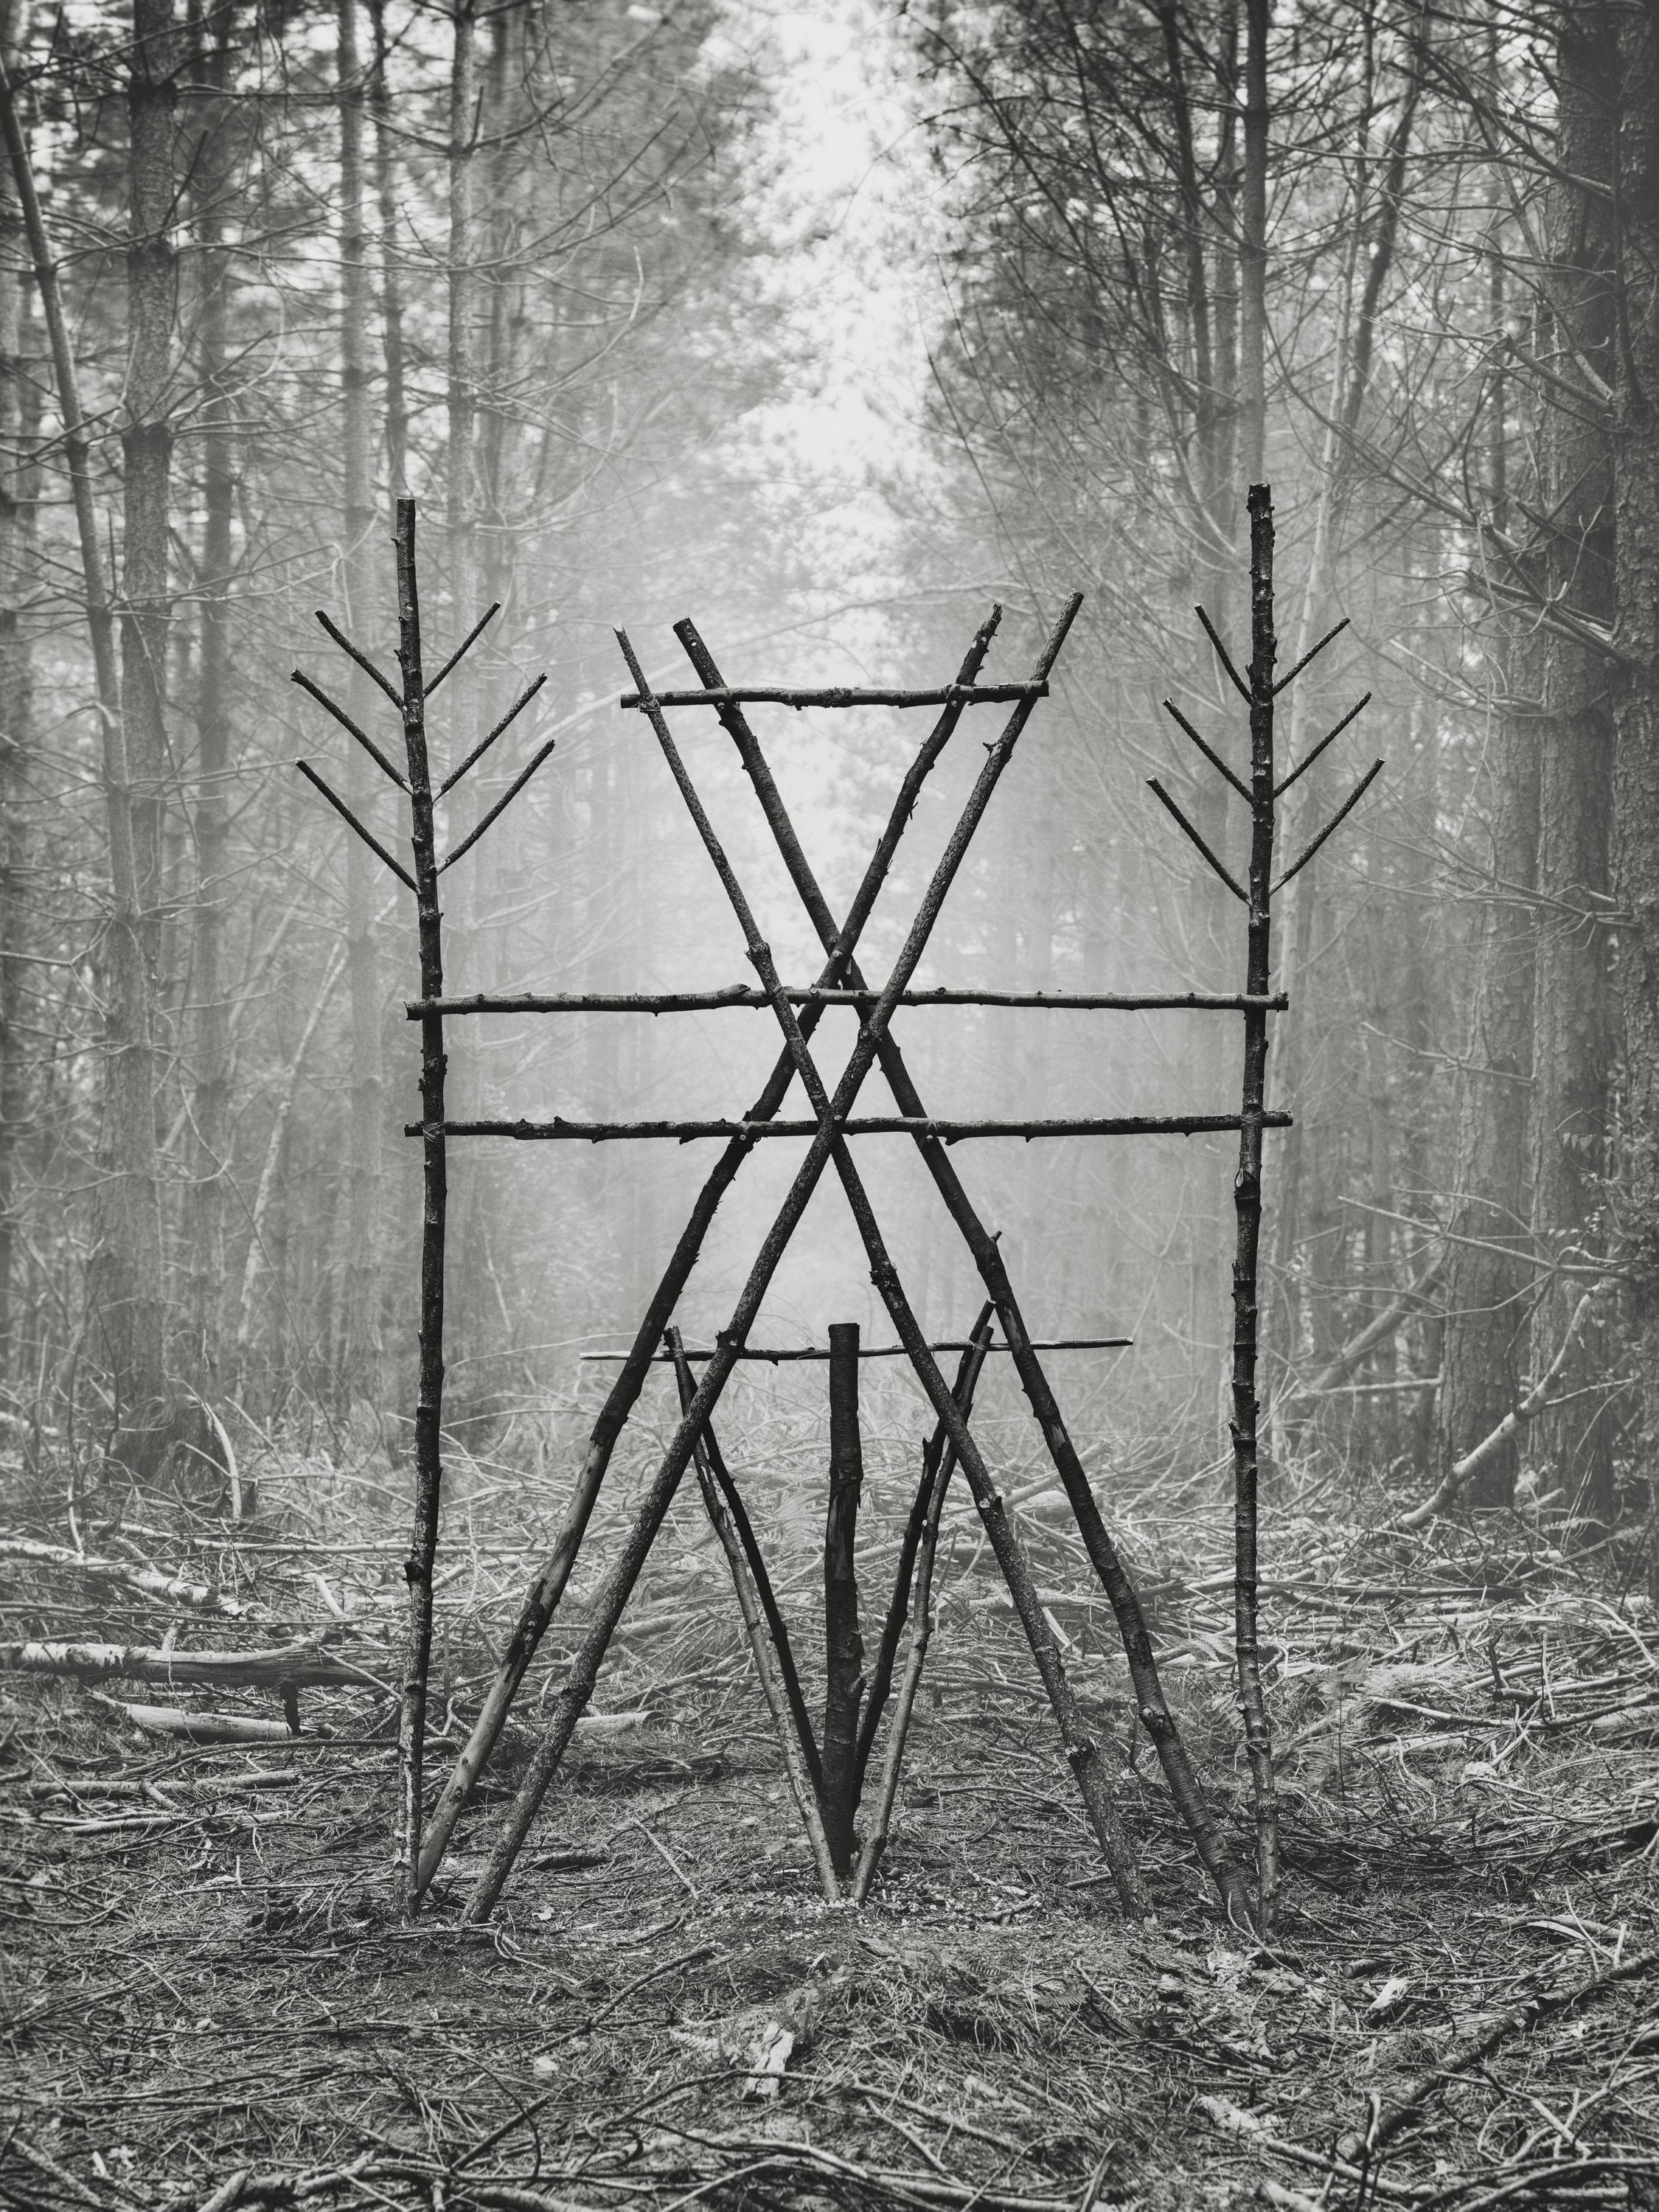 Jasper Goodall Landscape Print - Forest Figure 02 in Black and White Print of Talismanic Sculptural Wood